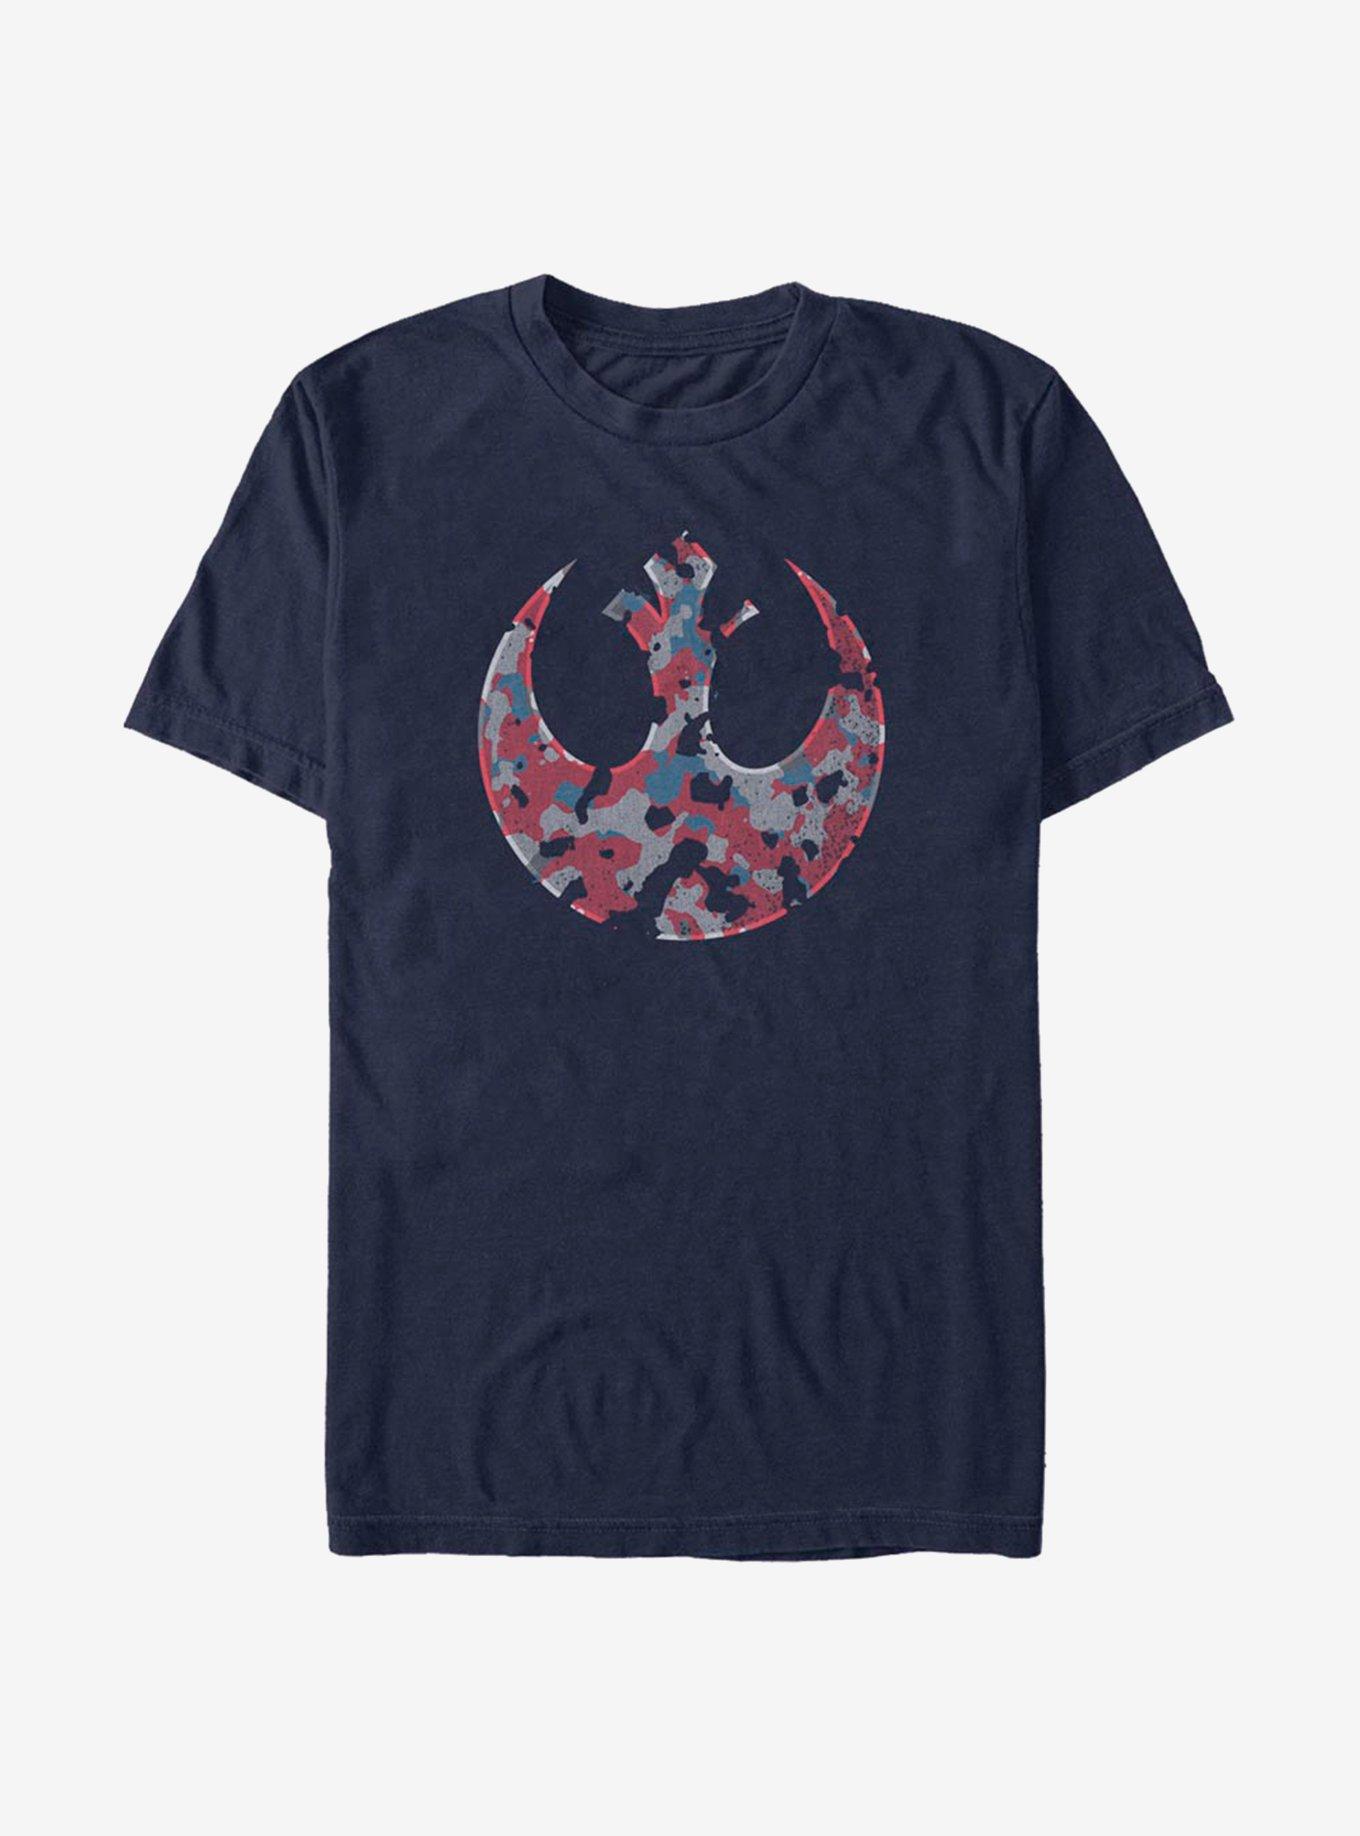 Star Wars Camo Rebel Crest T-Shirt, NAVY, hi-res